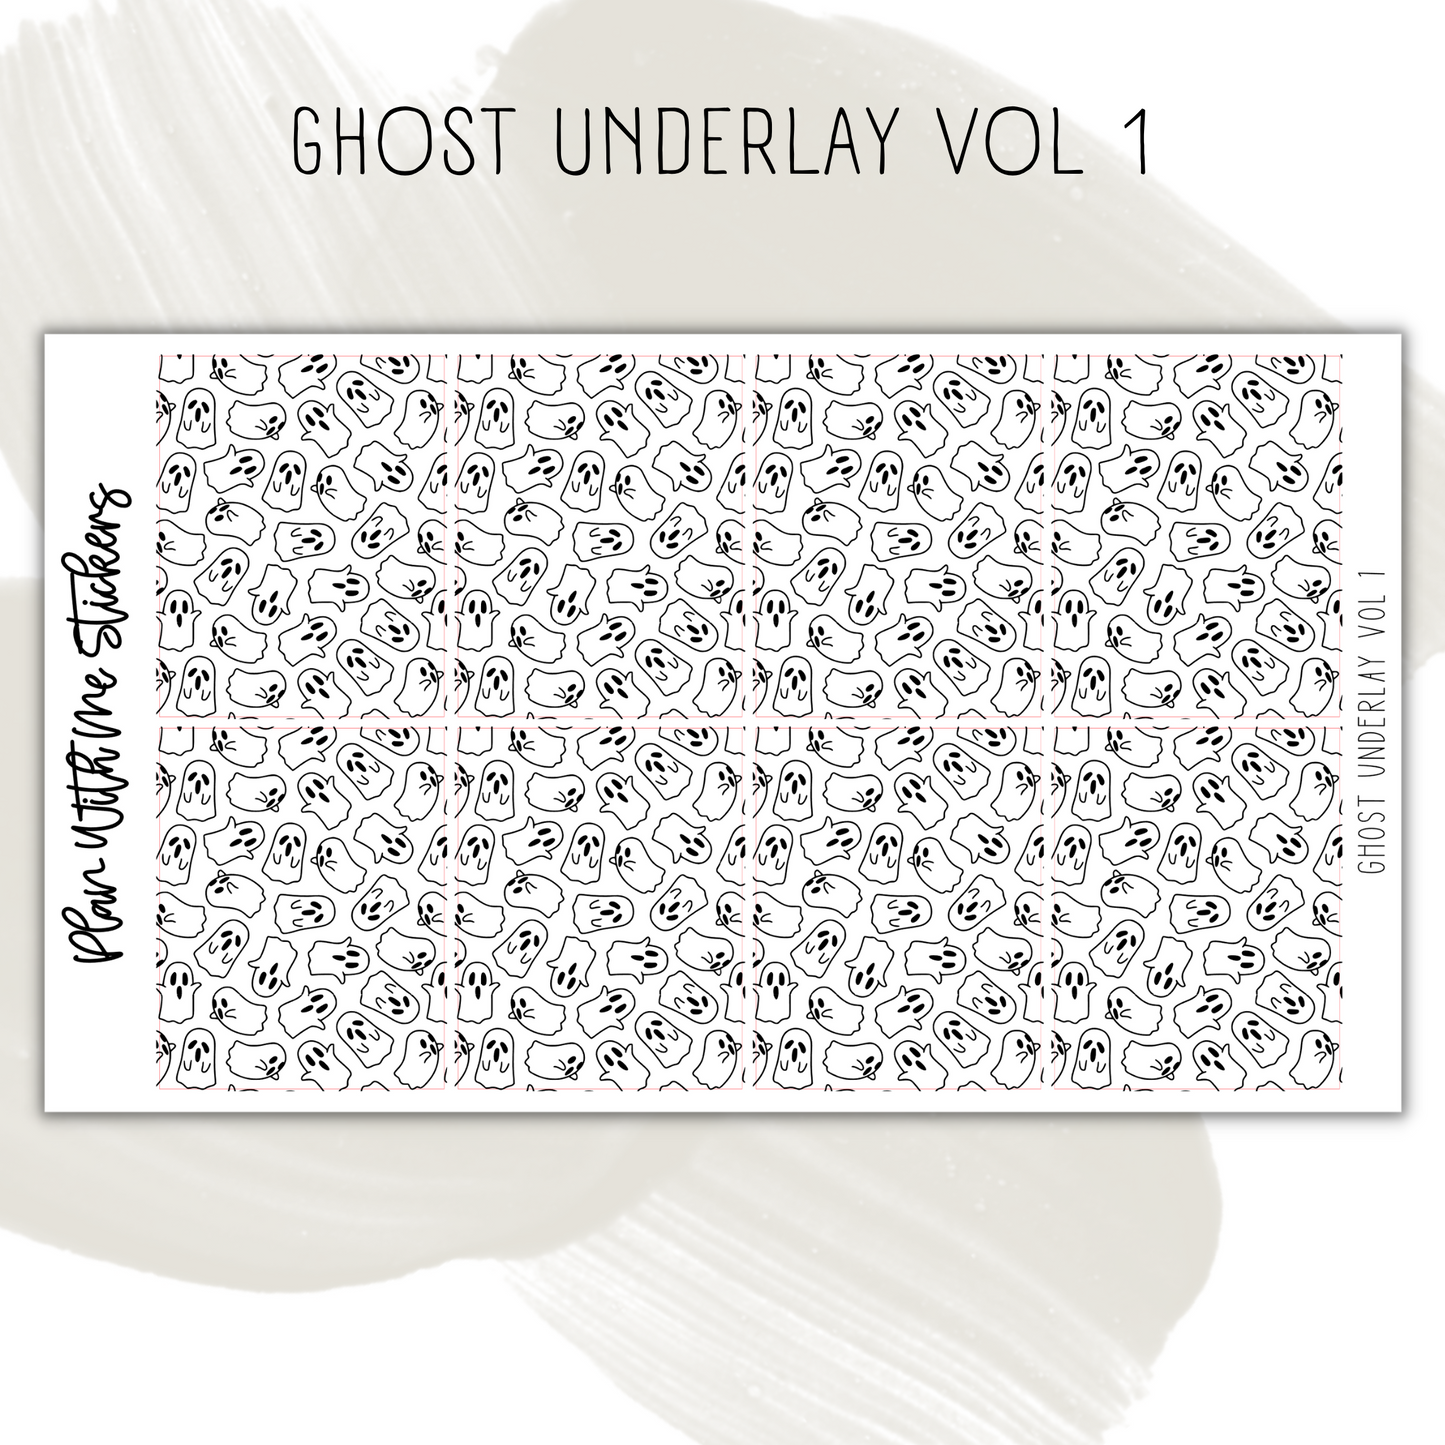 Ghost Underlay Vol 1